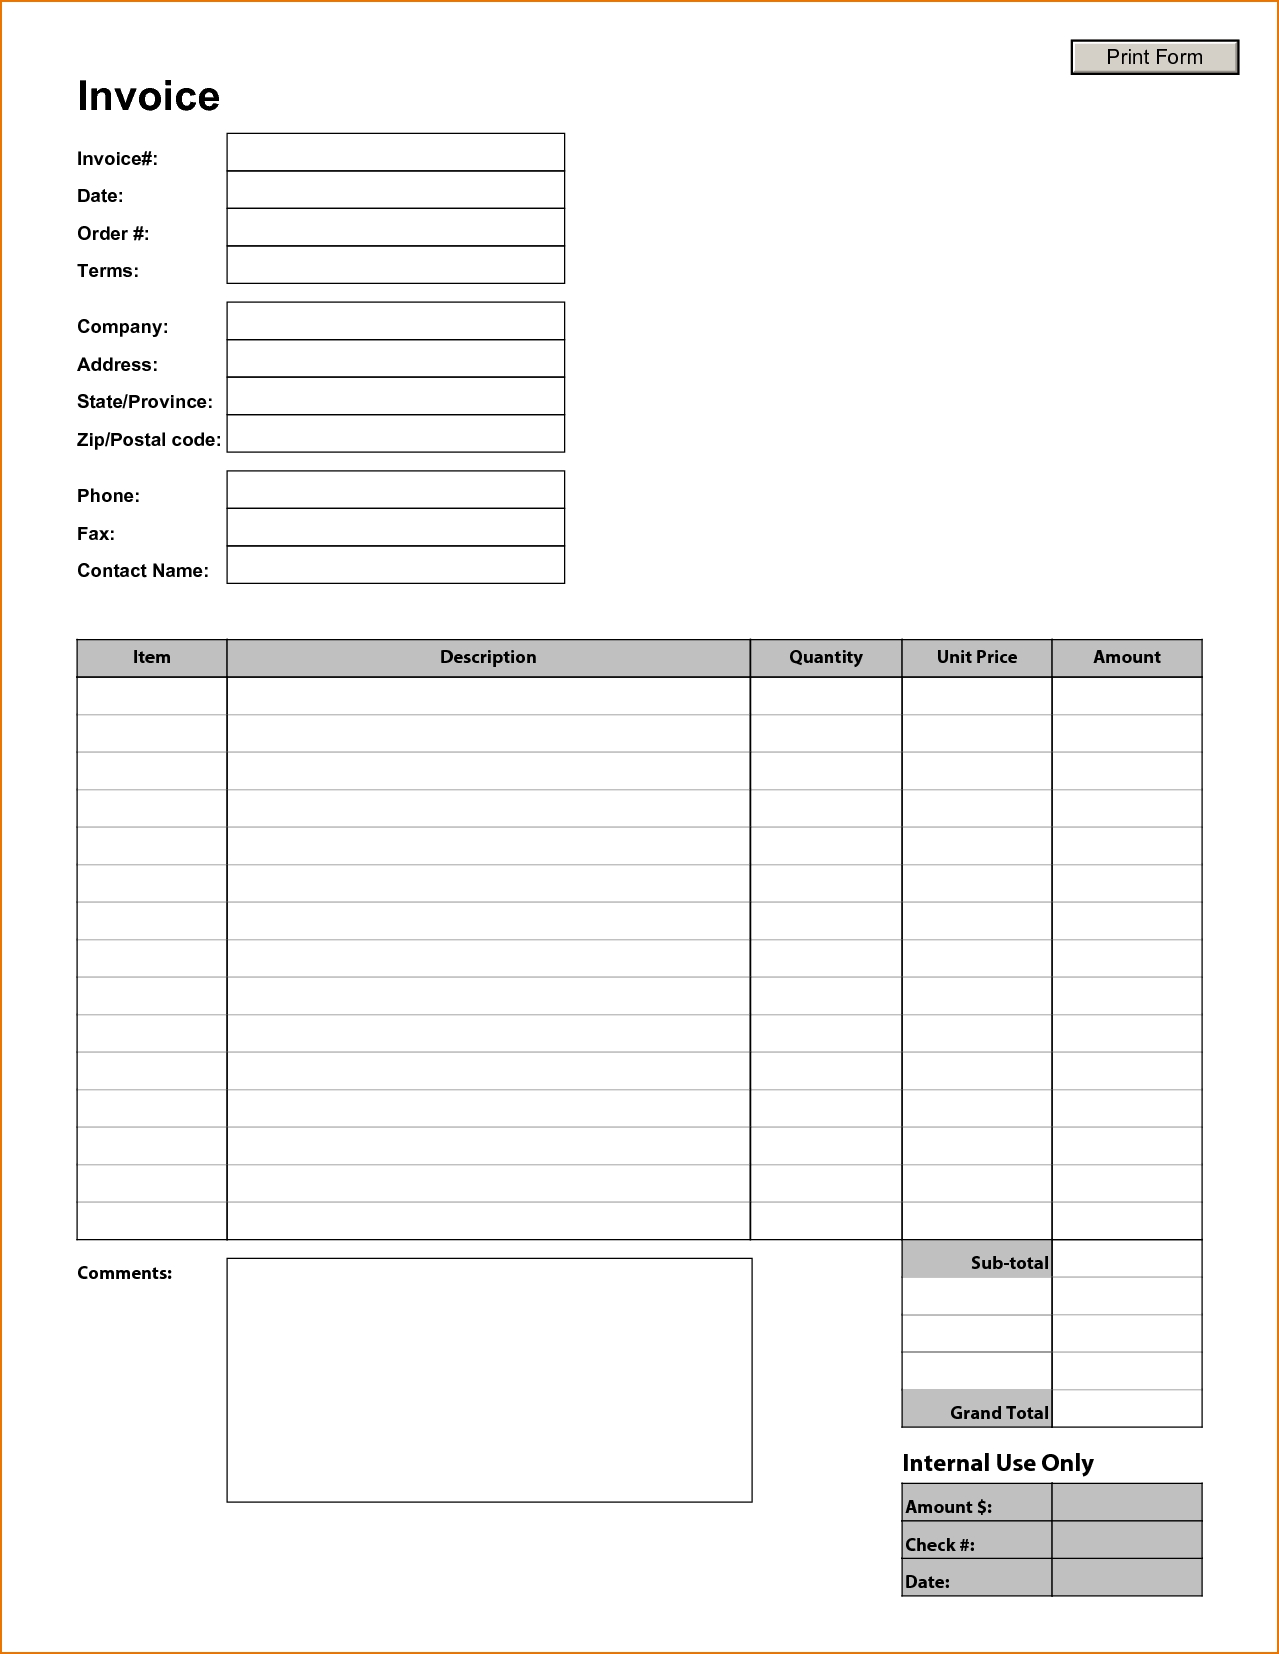 free printable invoice forms printable yahtzee score sheets excel printable invoice pdf